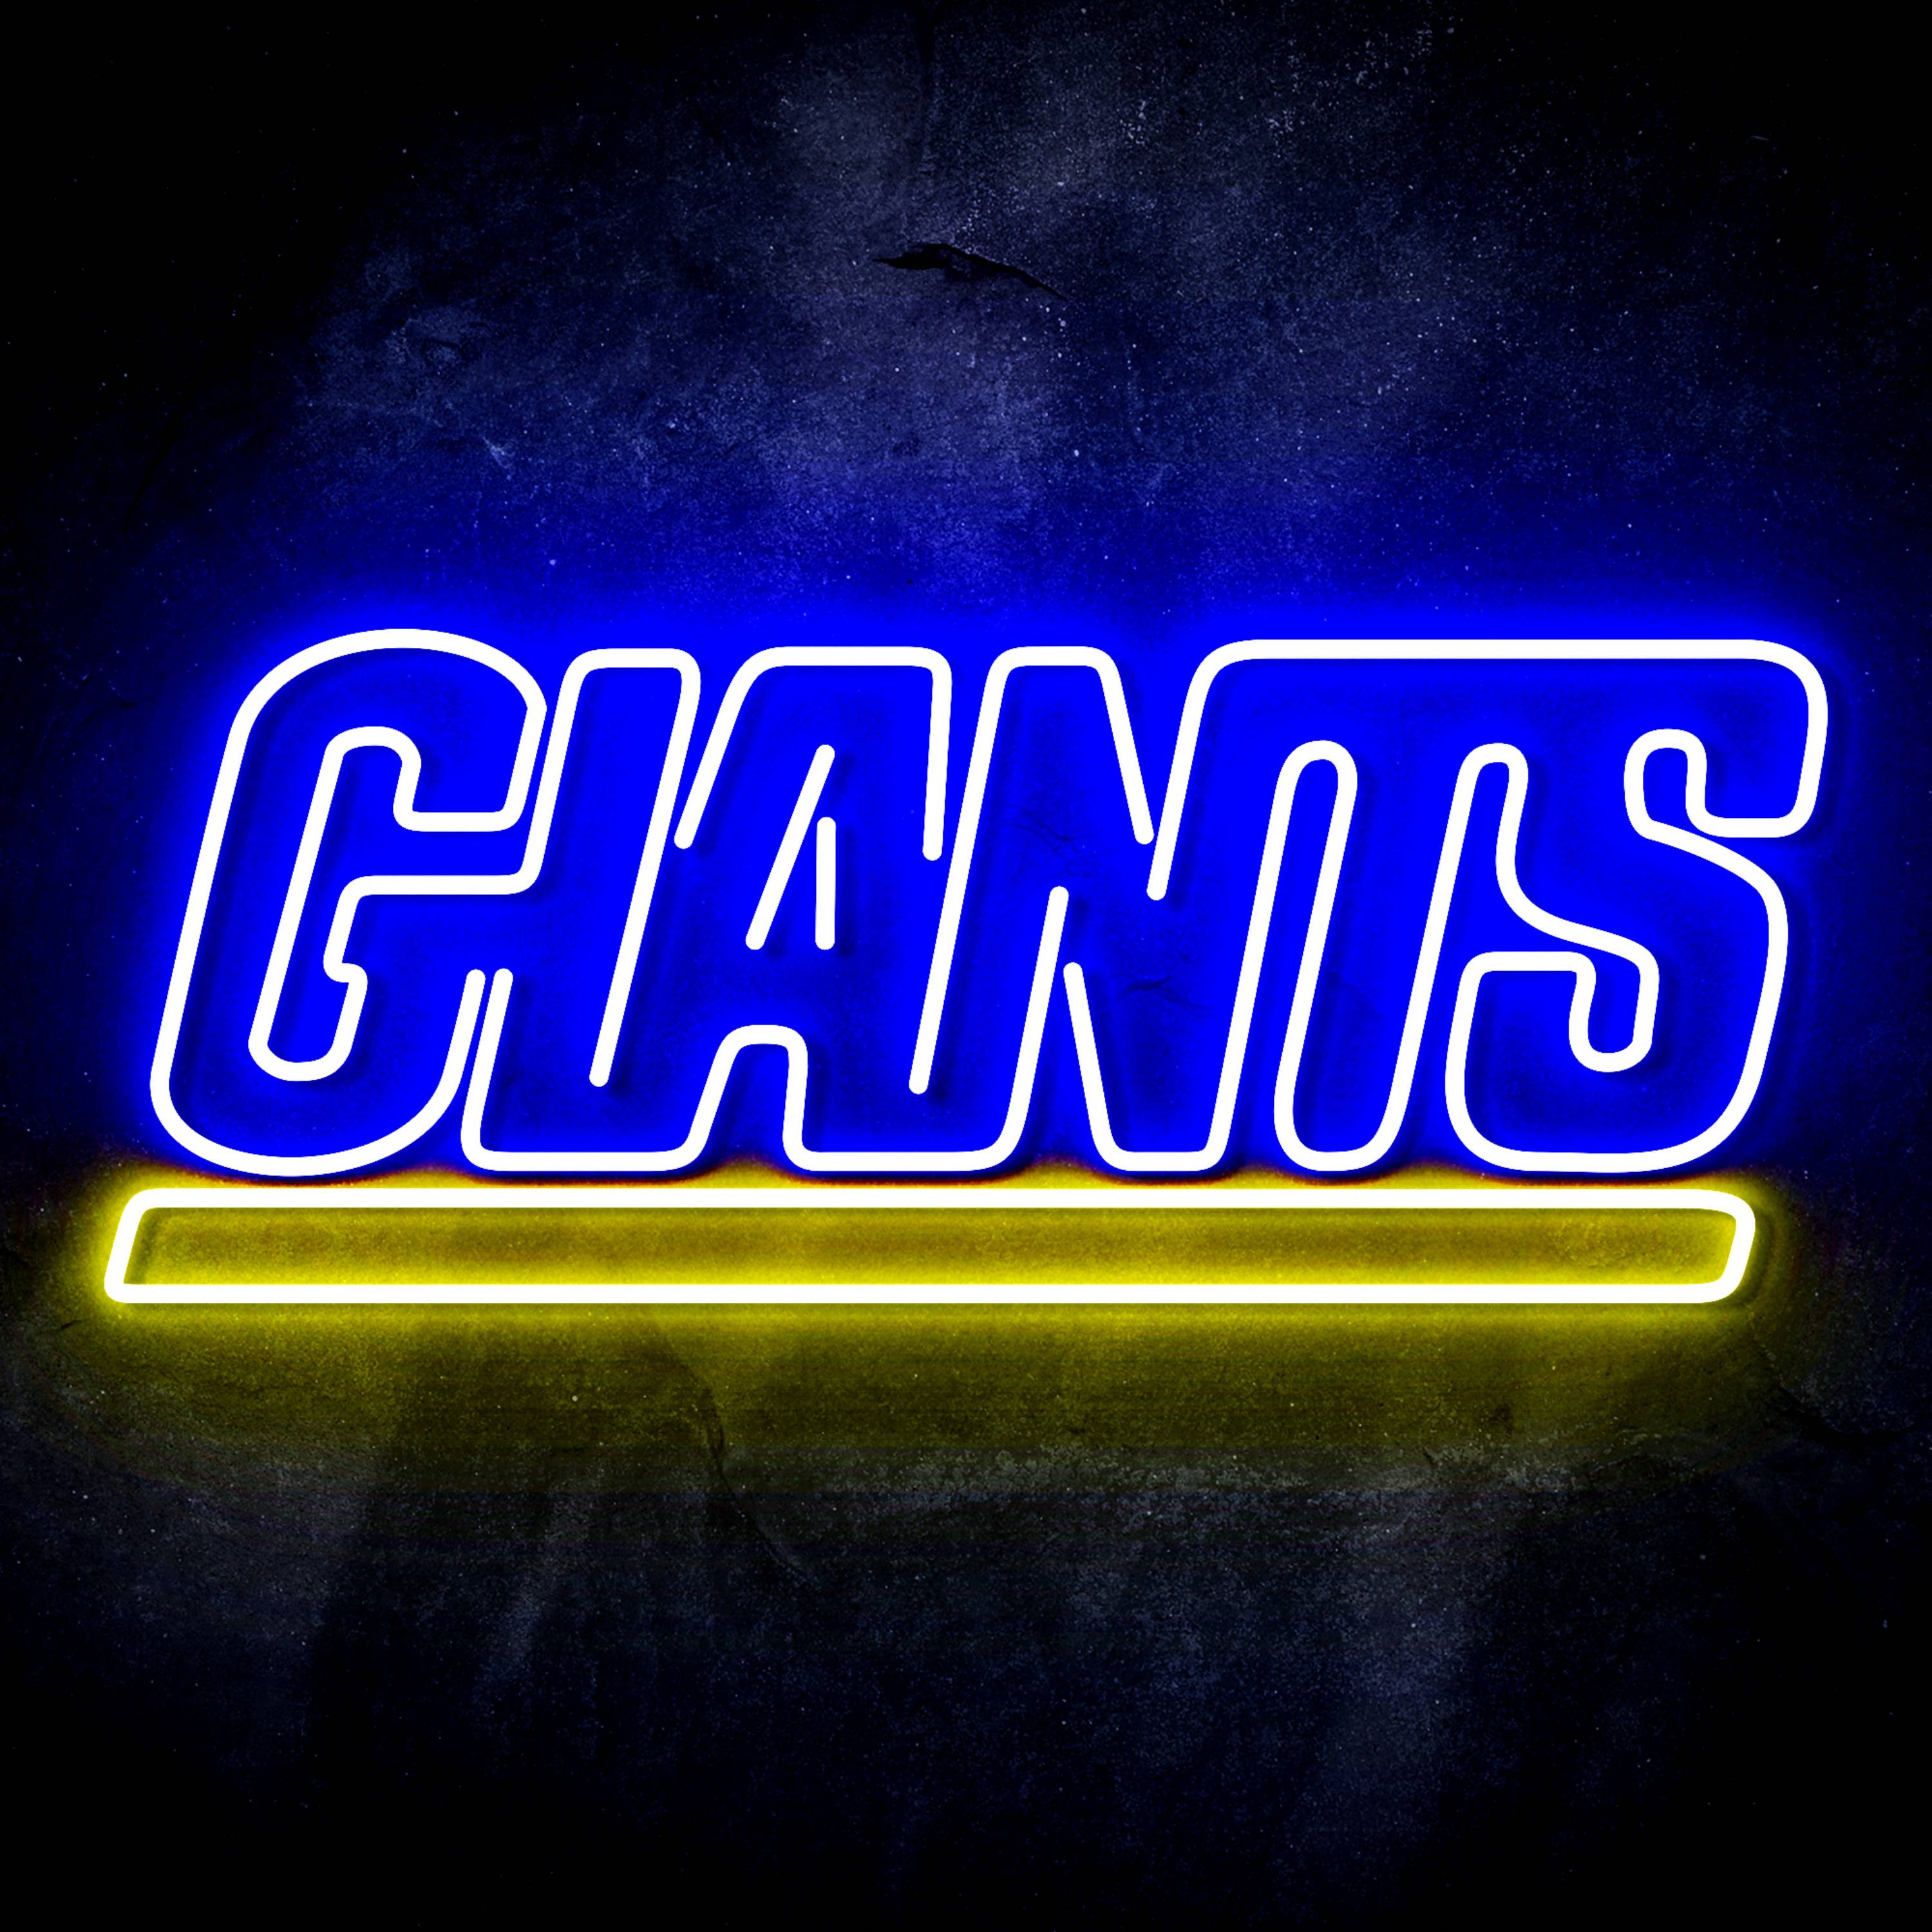 NFL GIANTS LED Neon Sign